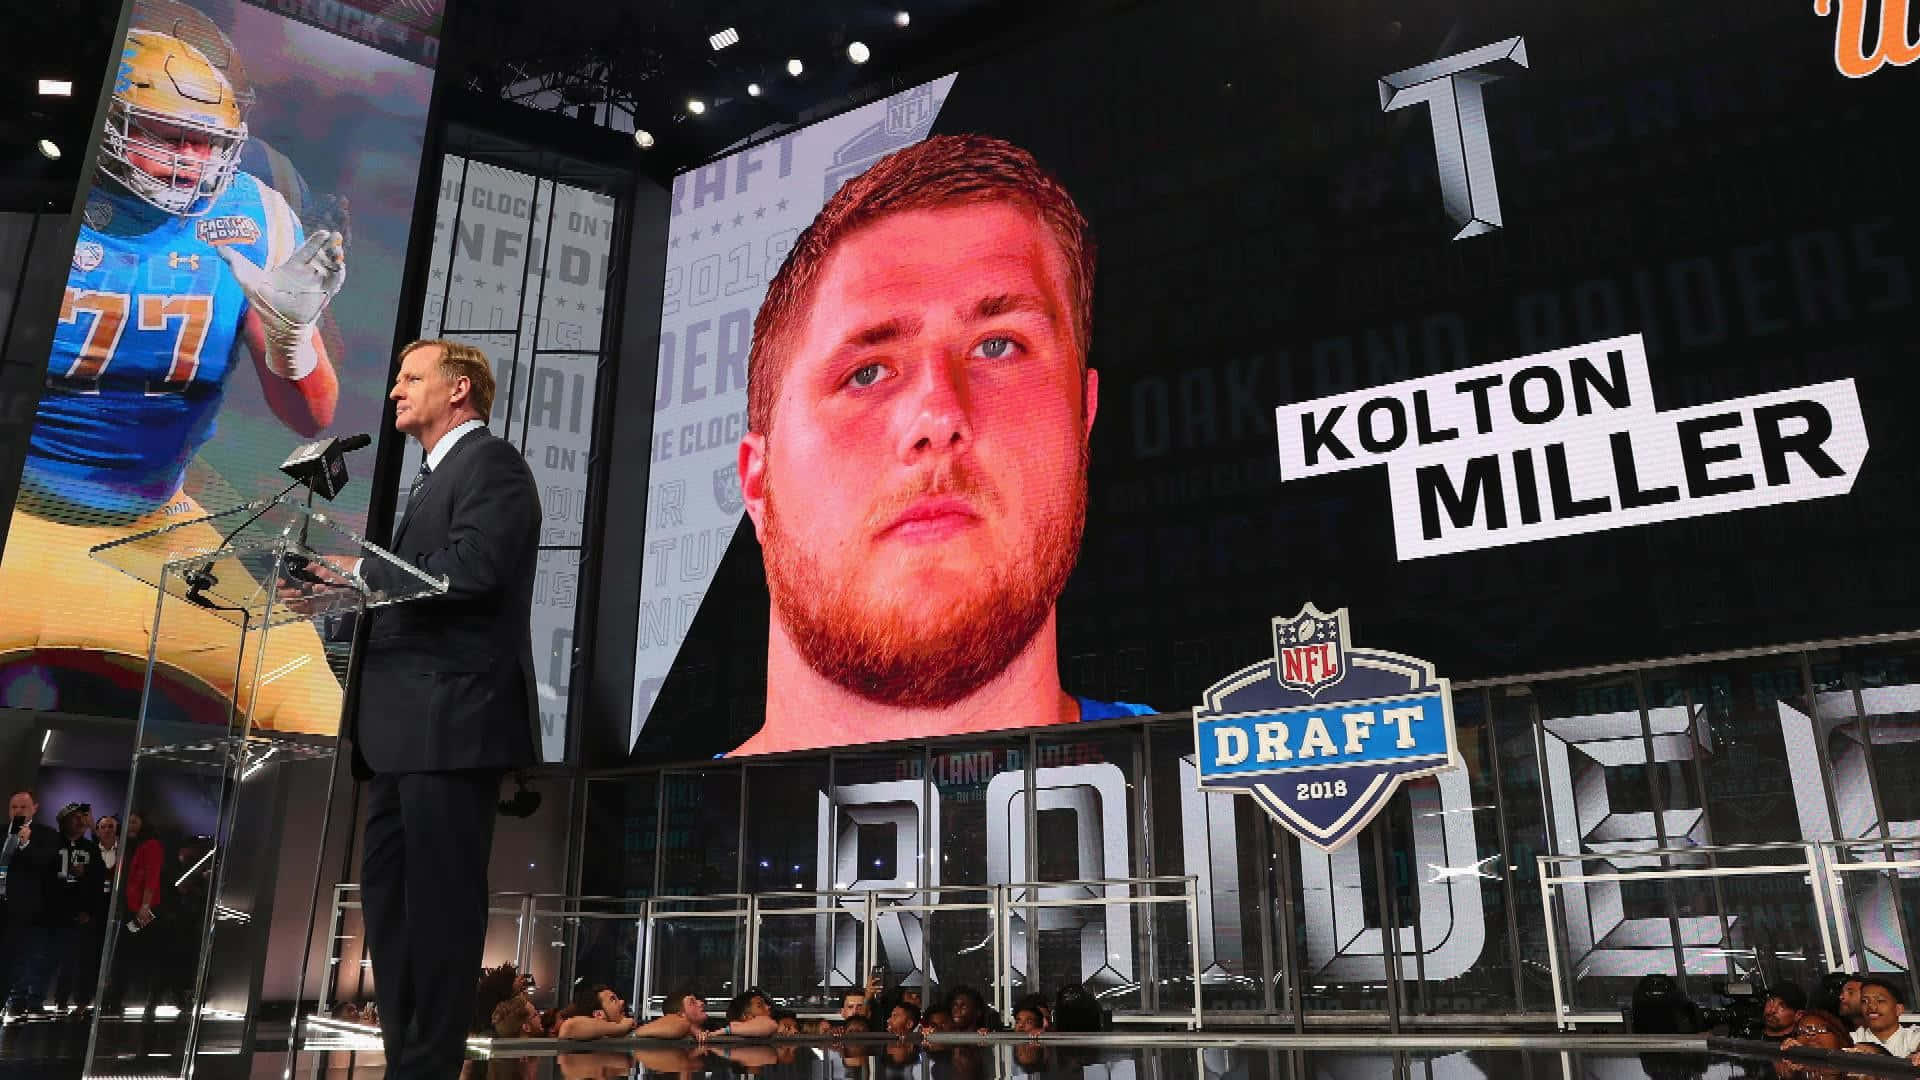 Kolton Miller Introduction in 2018 NFL Draft Wallpaper